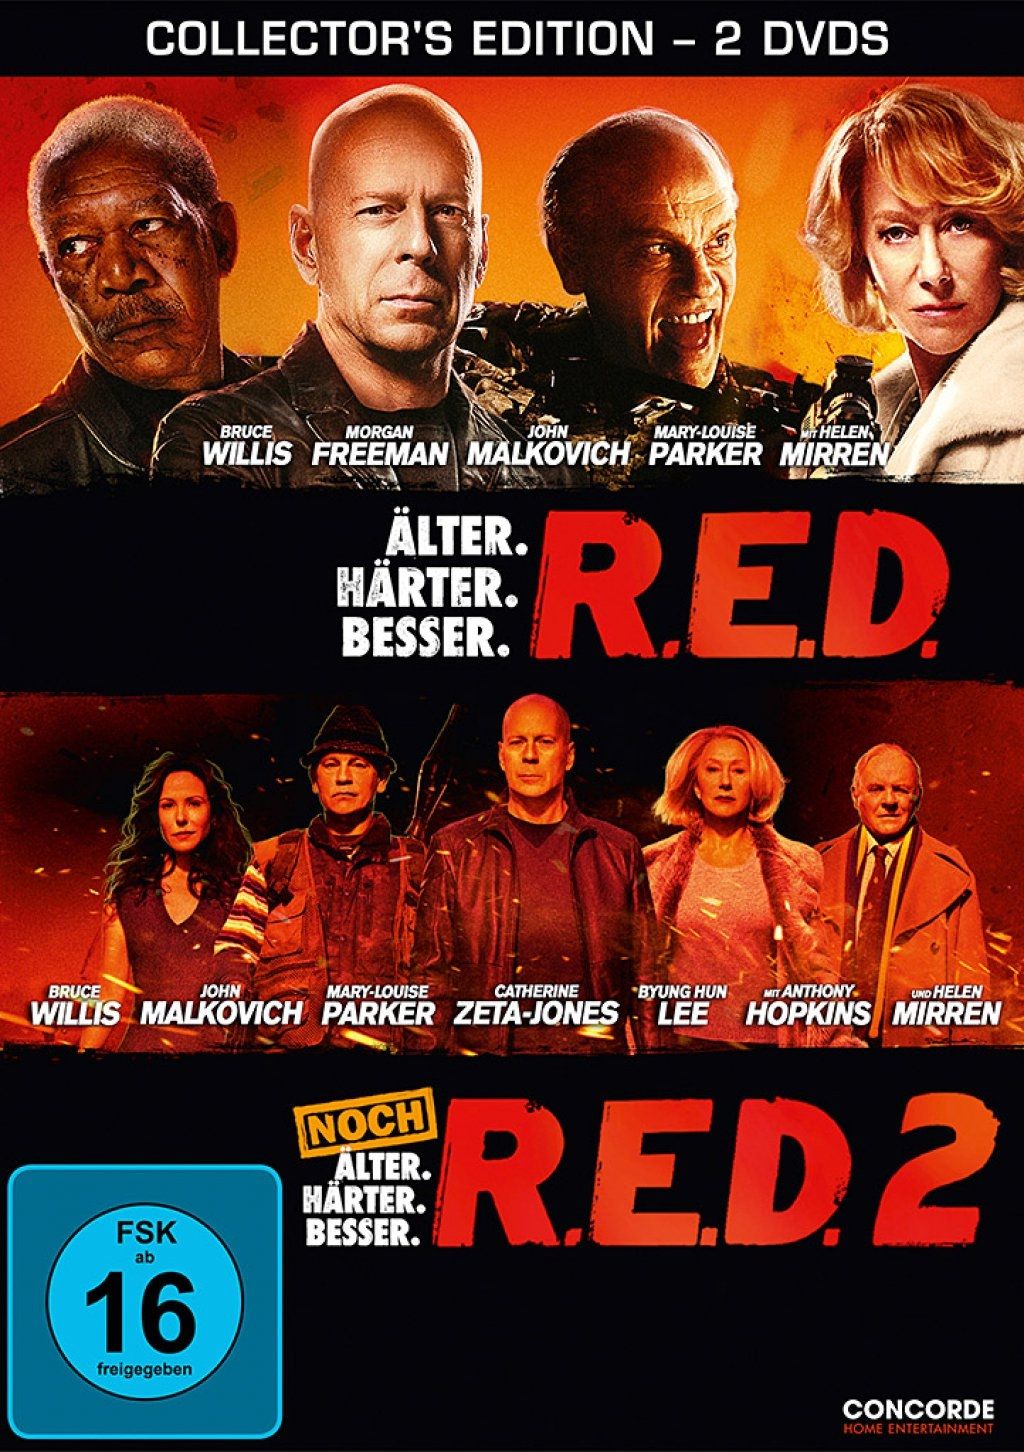 RED - Älter. Härter. Besser. / RED 2 - Noch Älter. Härter. Besser. (Double Feature) (2 Discs)